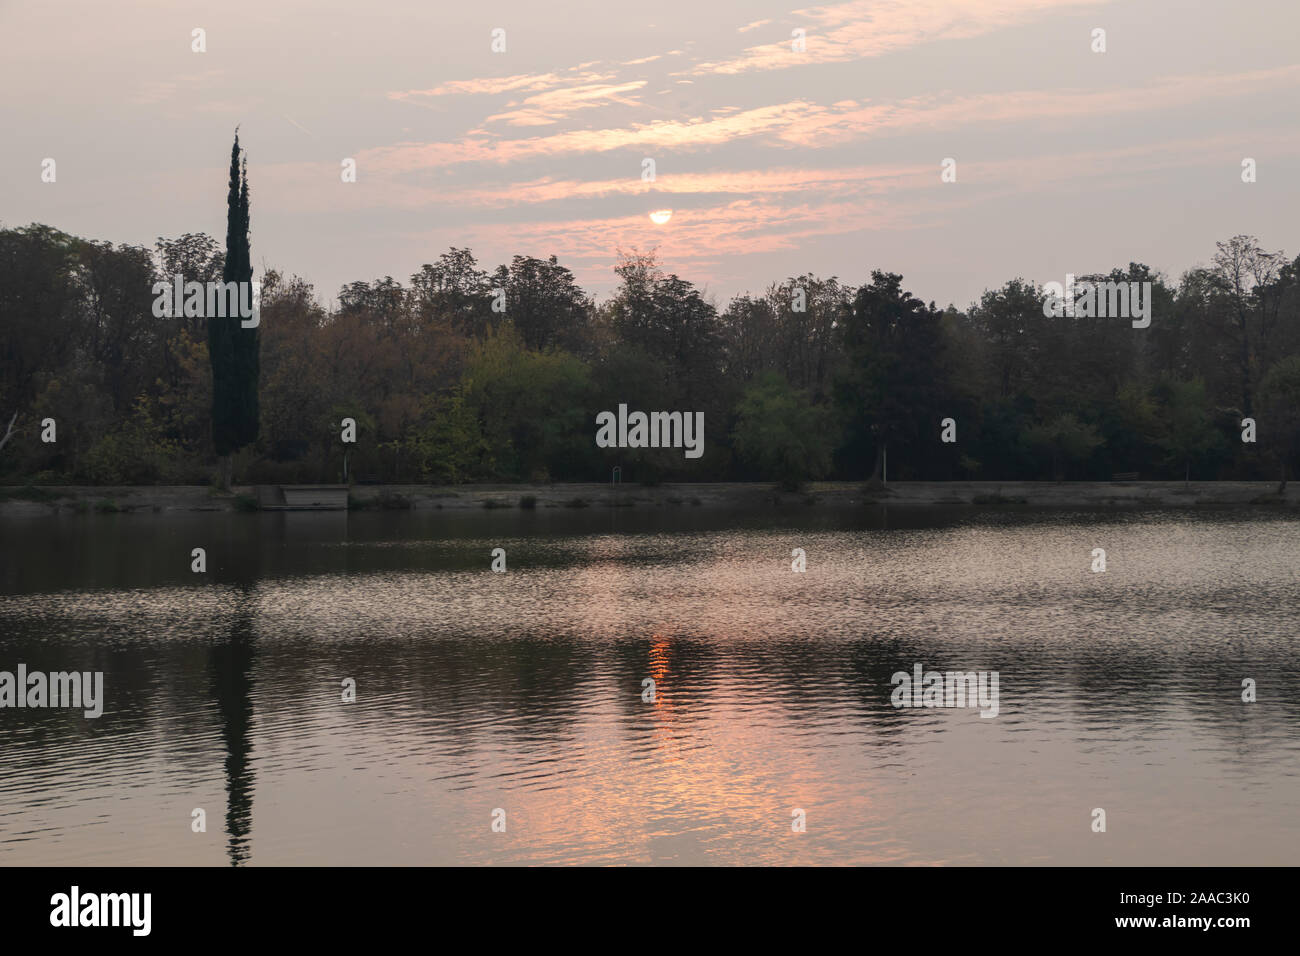 Stara Zagora, Bulgarien - 30. Oktober 2019: Sonnenaufgang über dem See Zagorka. Stockfoto